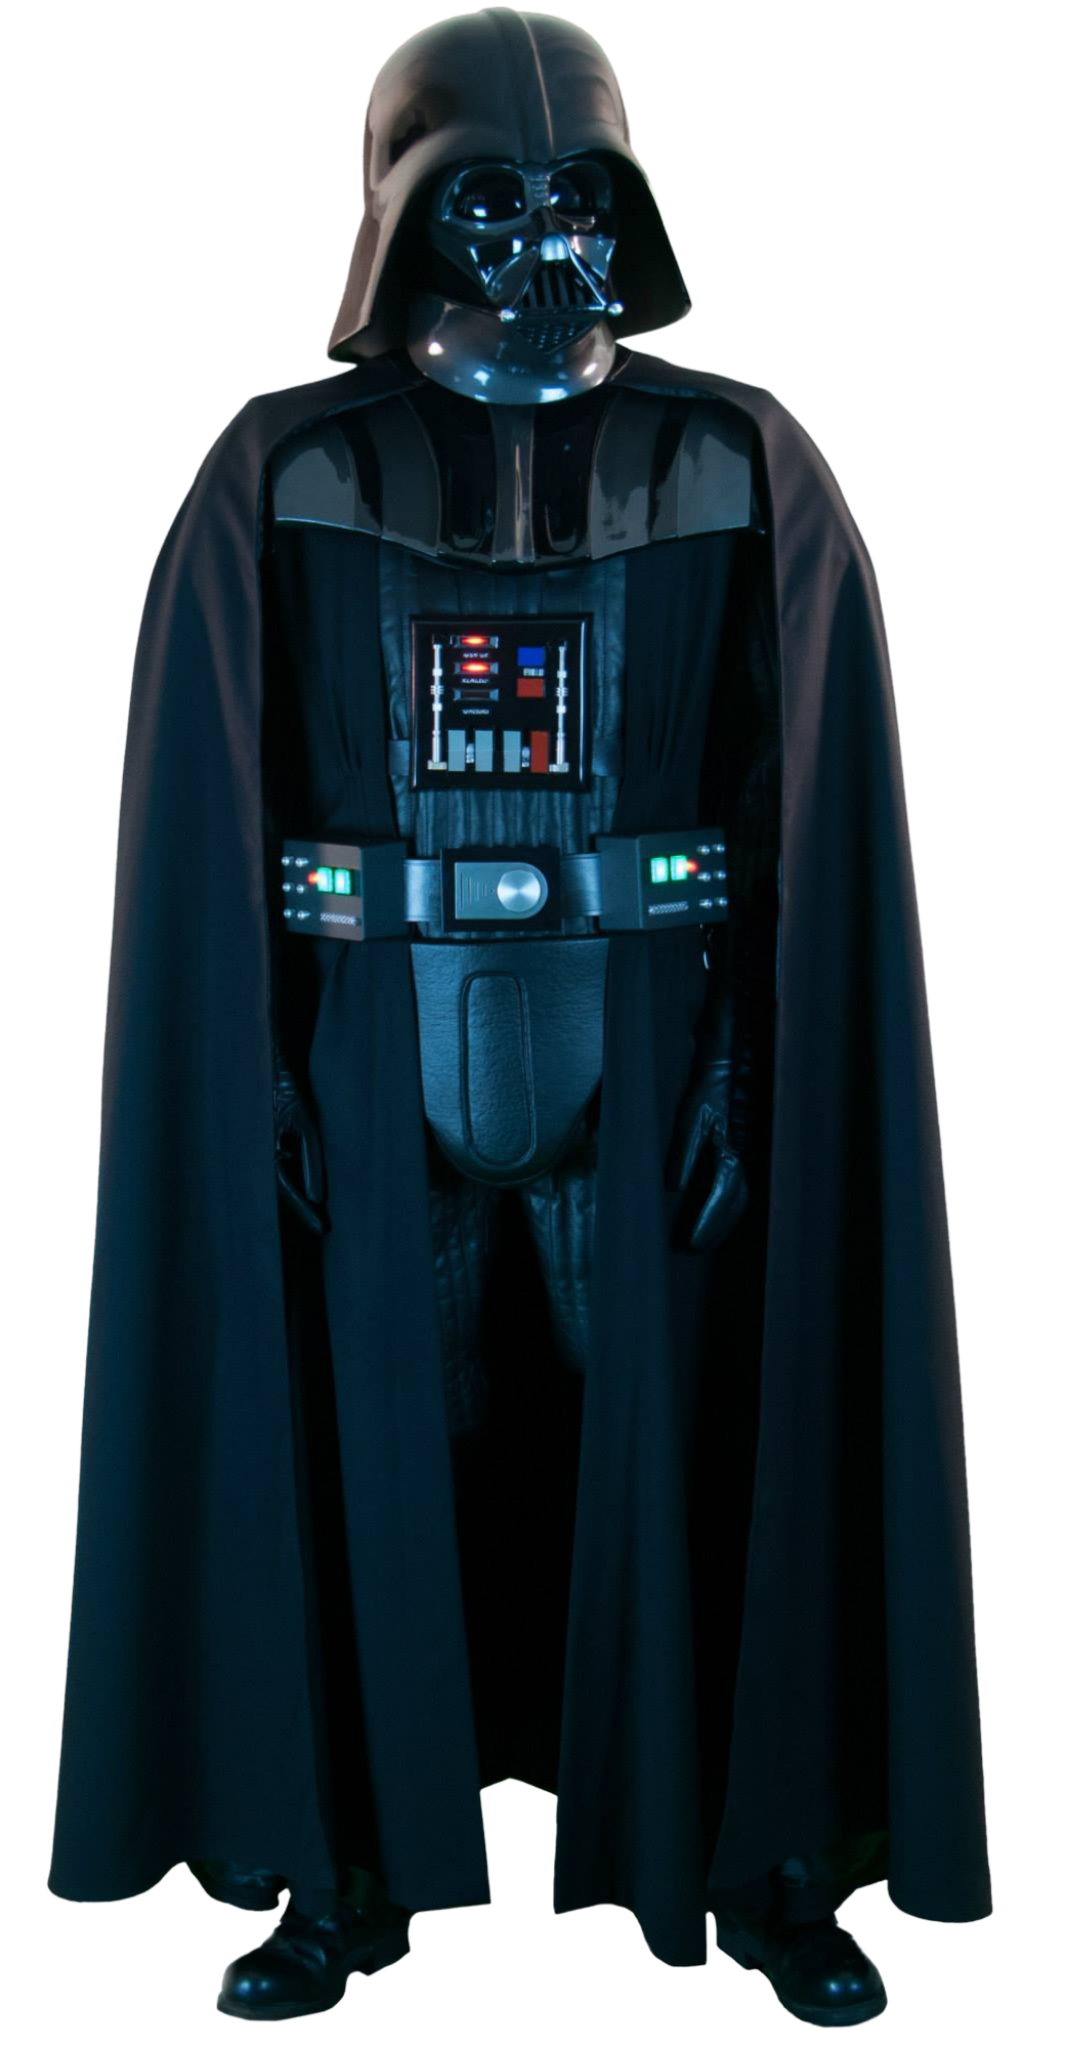 Darth Vader #39 s armor Wookieepedia Fandom